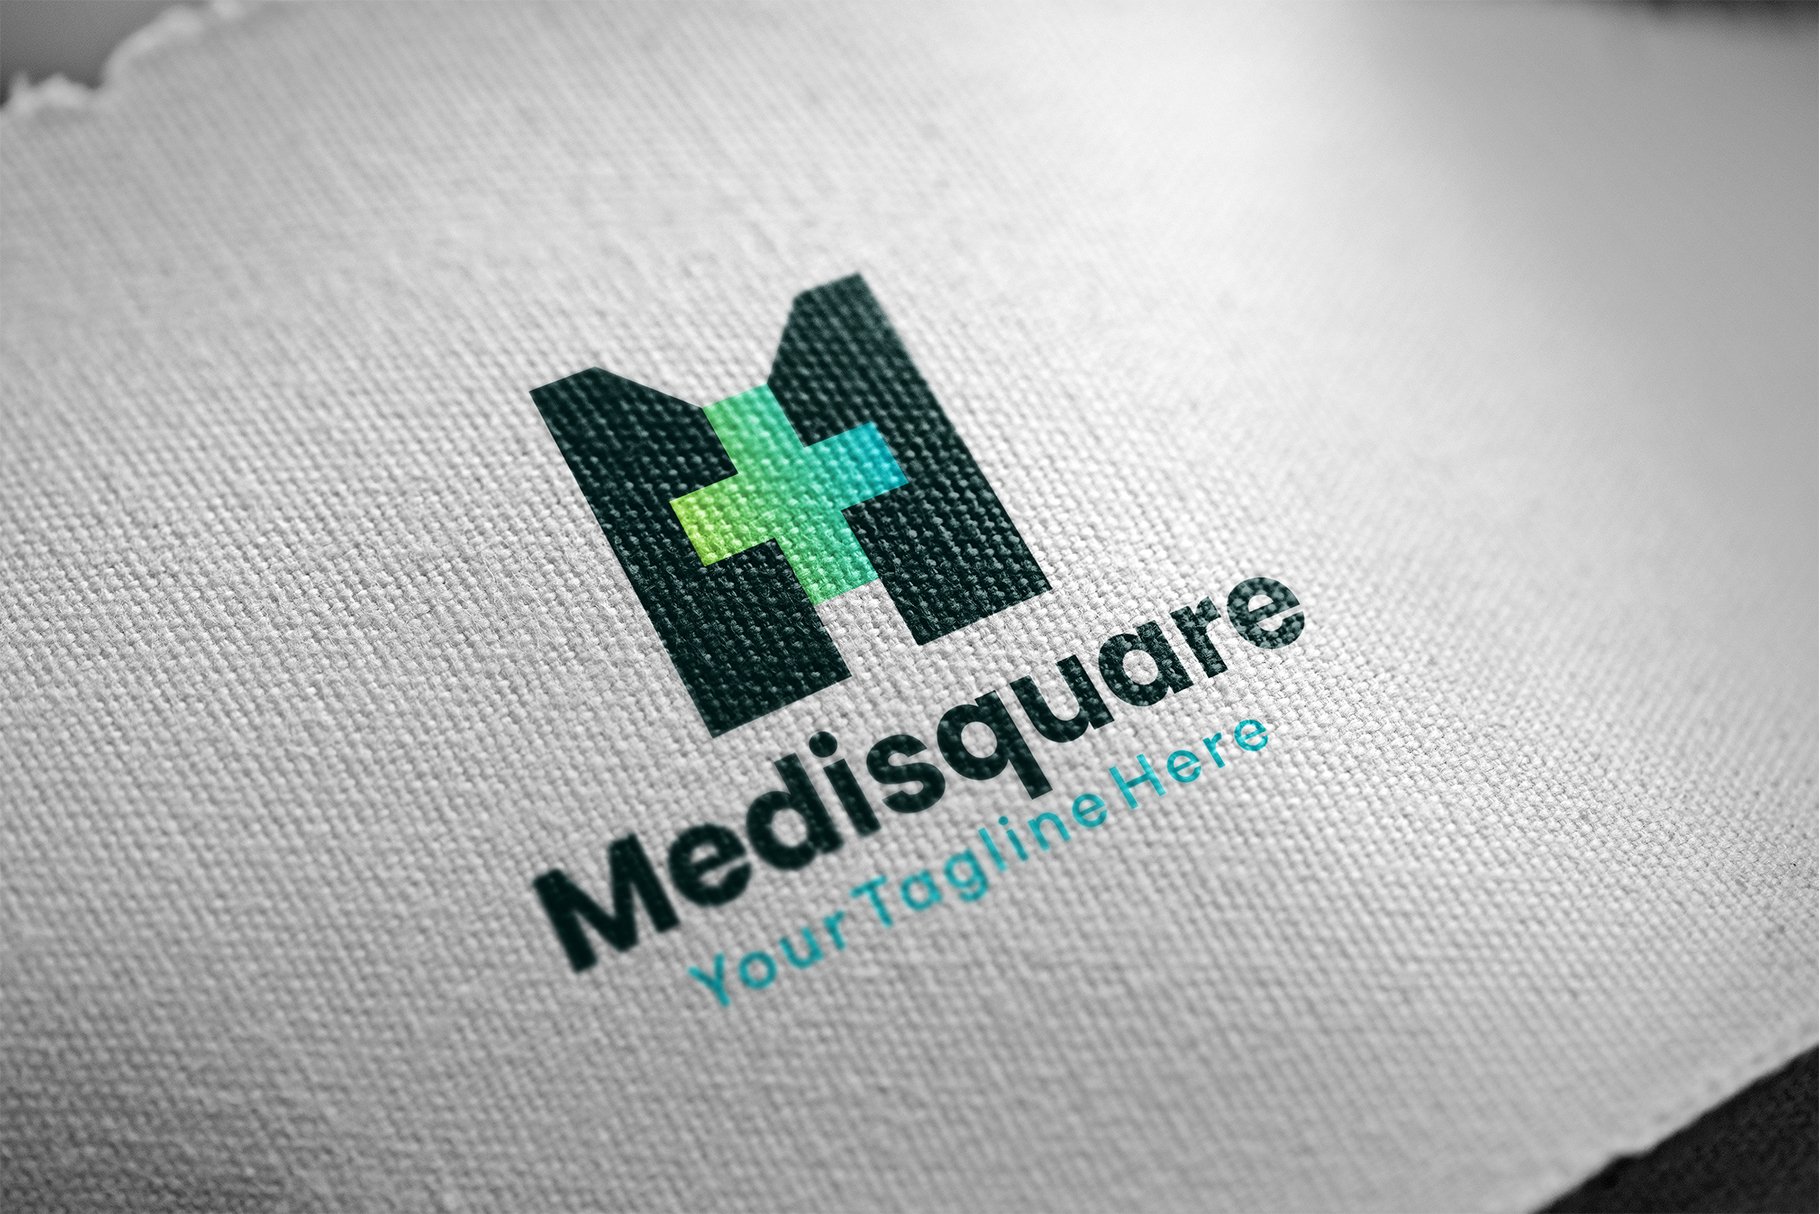 Medical Health Care Logo - M Logo cover image.